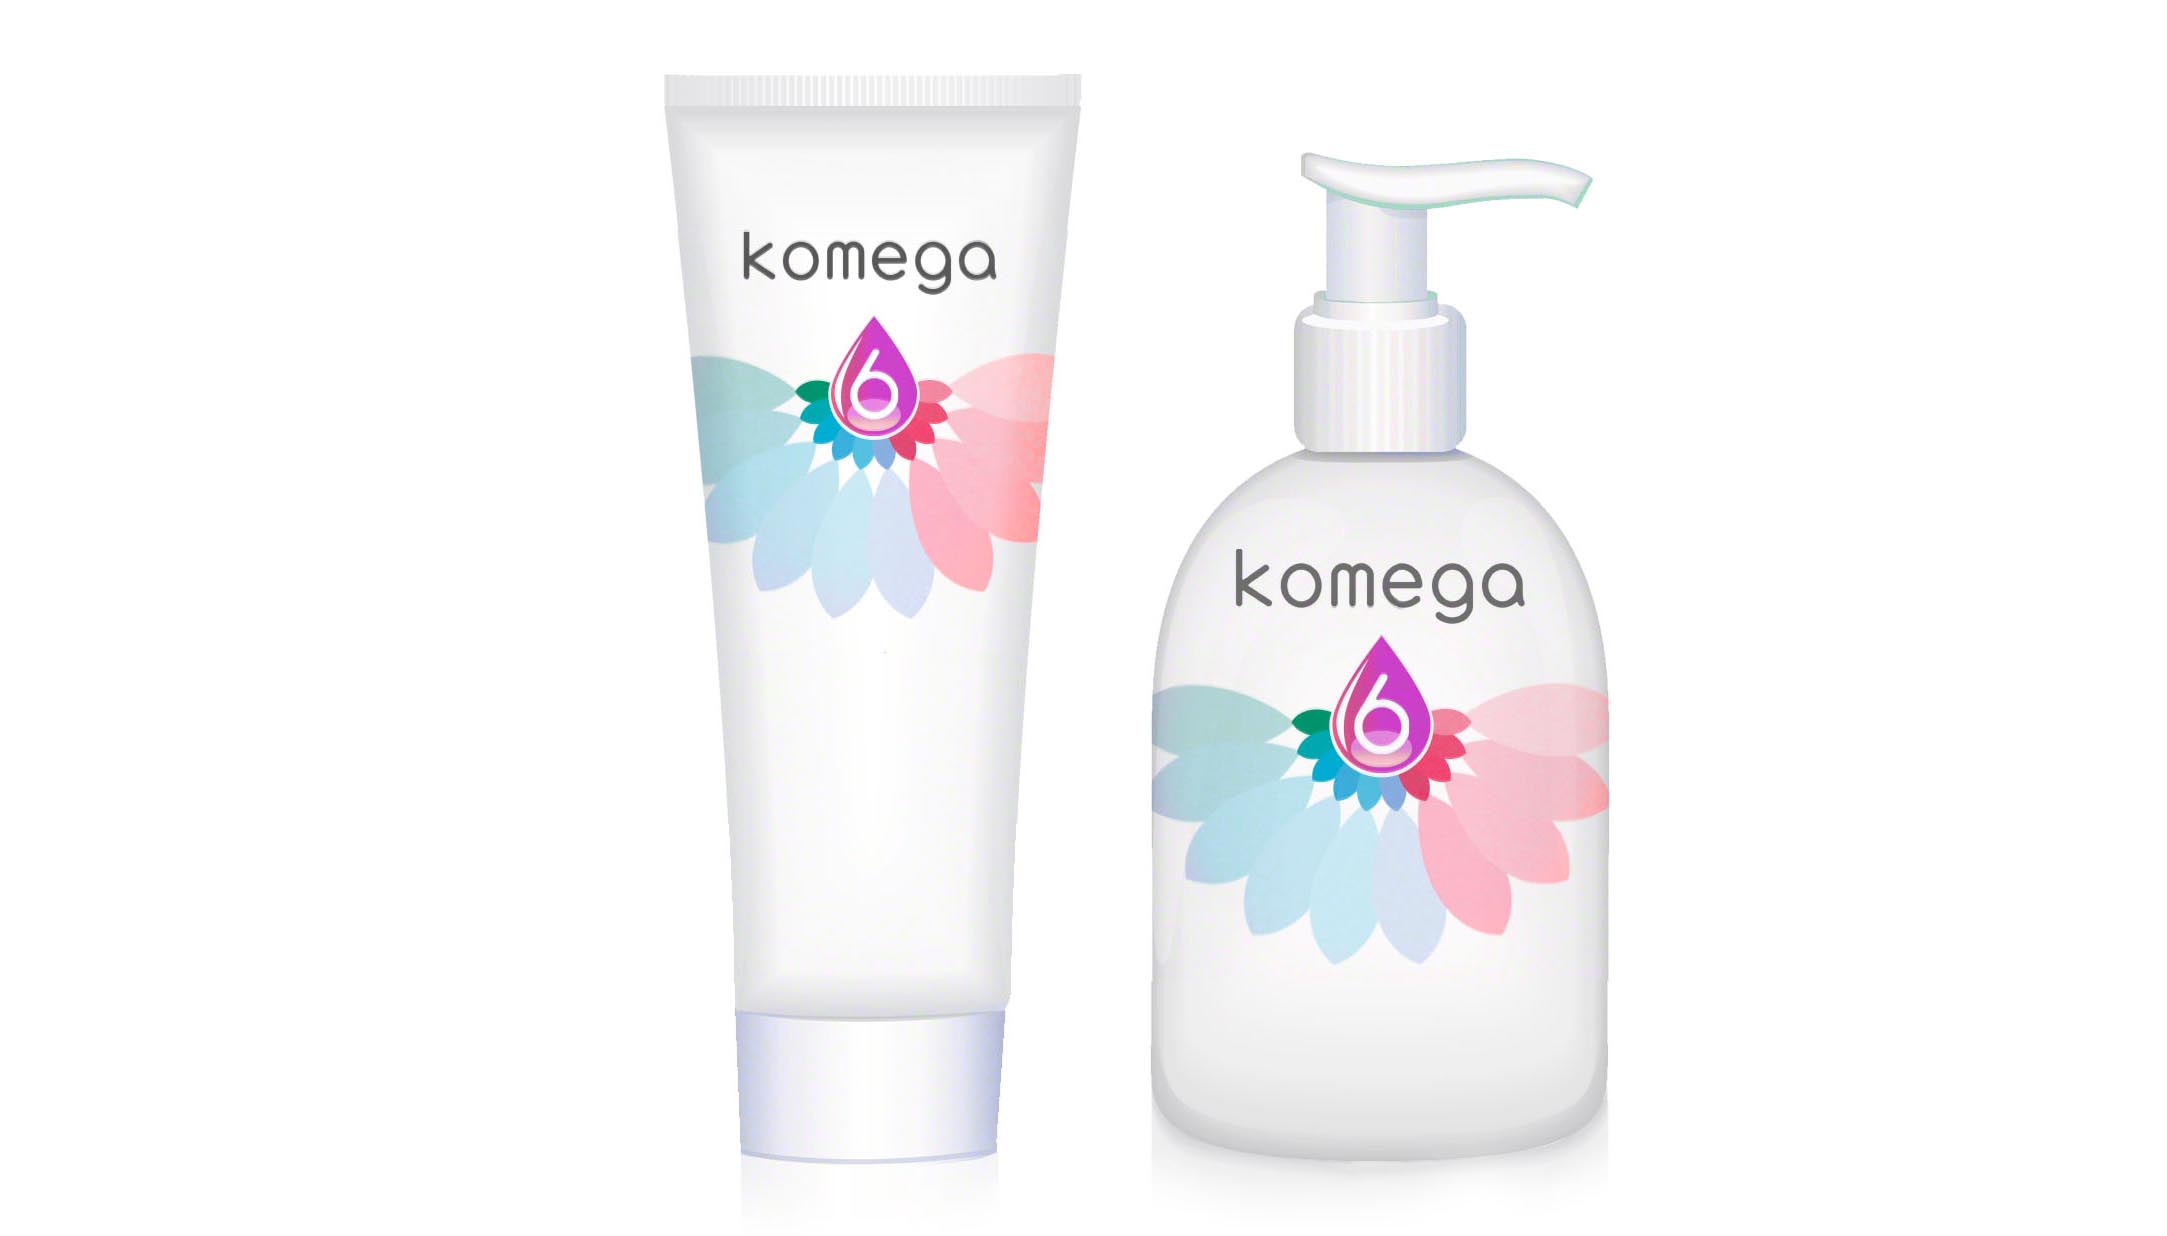 Dalya Kandil created logos and brand identity for Komega 6, pure kenaf seed oil.